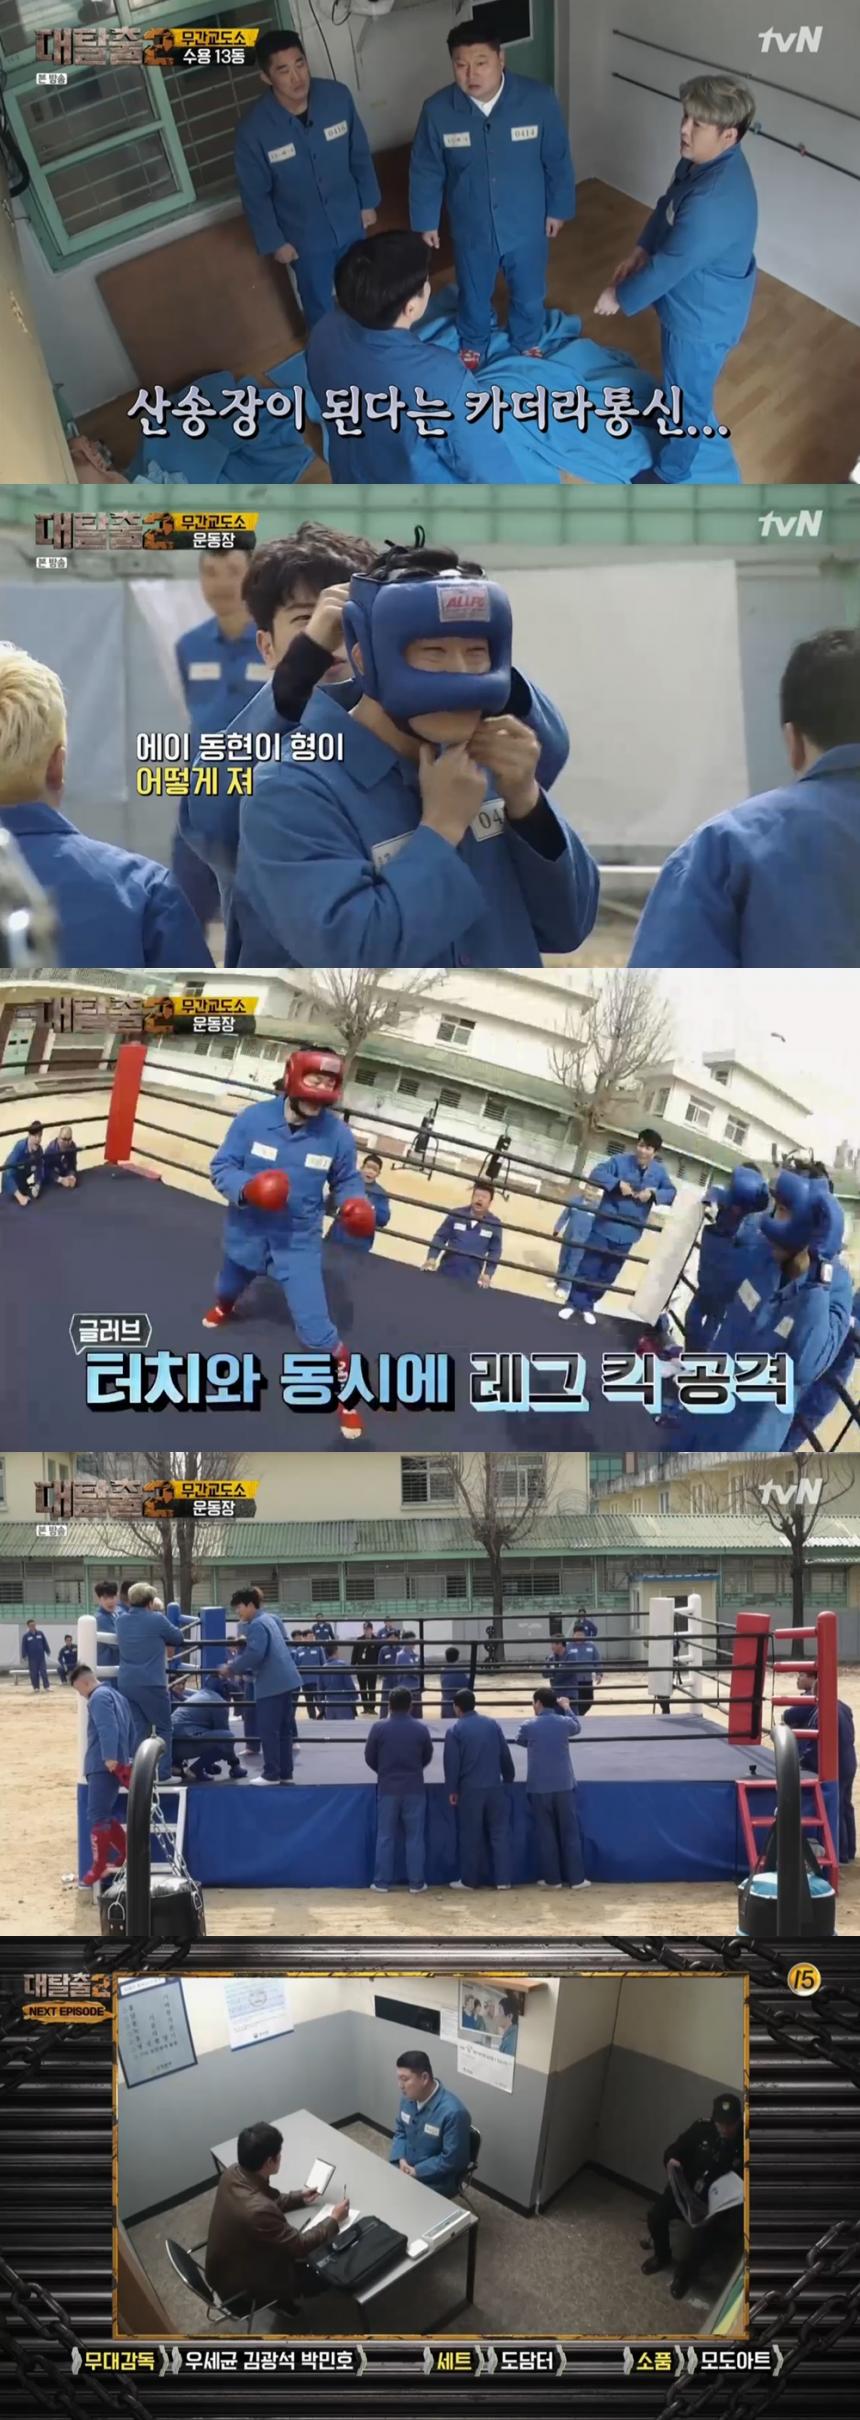 tvN '대탈출2' 방송 캡쳐